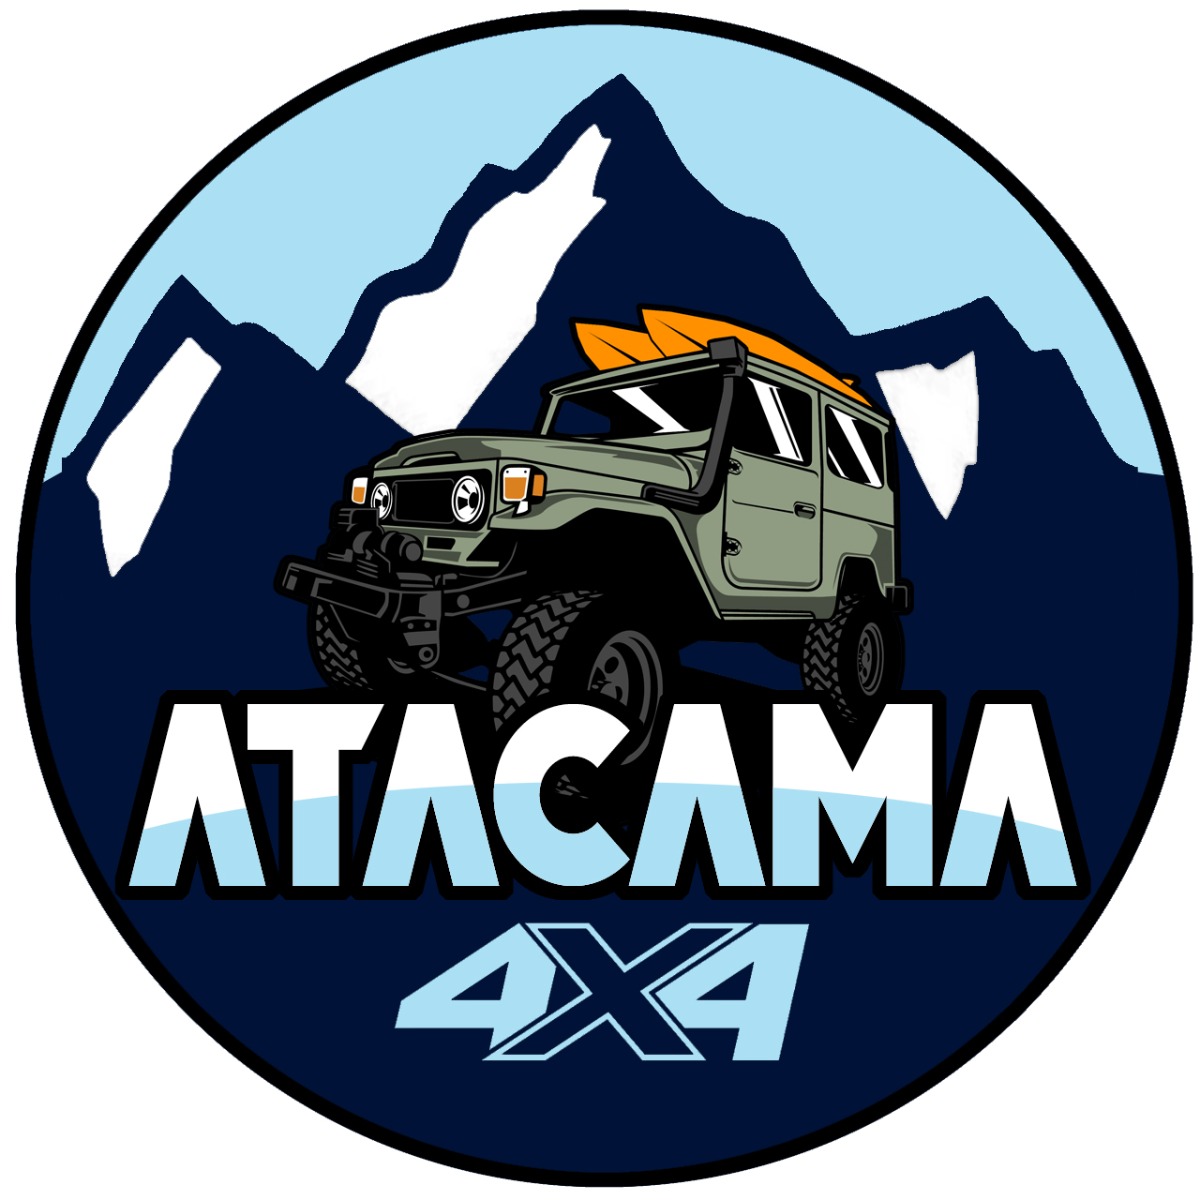 ATACAMA_4X4